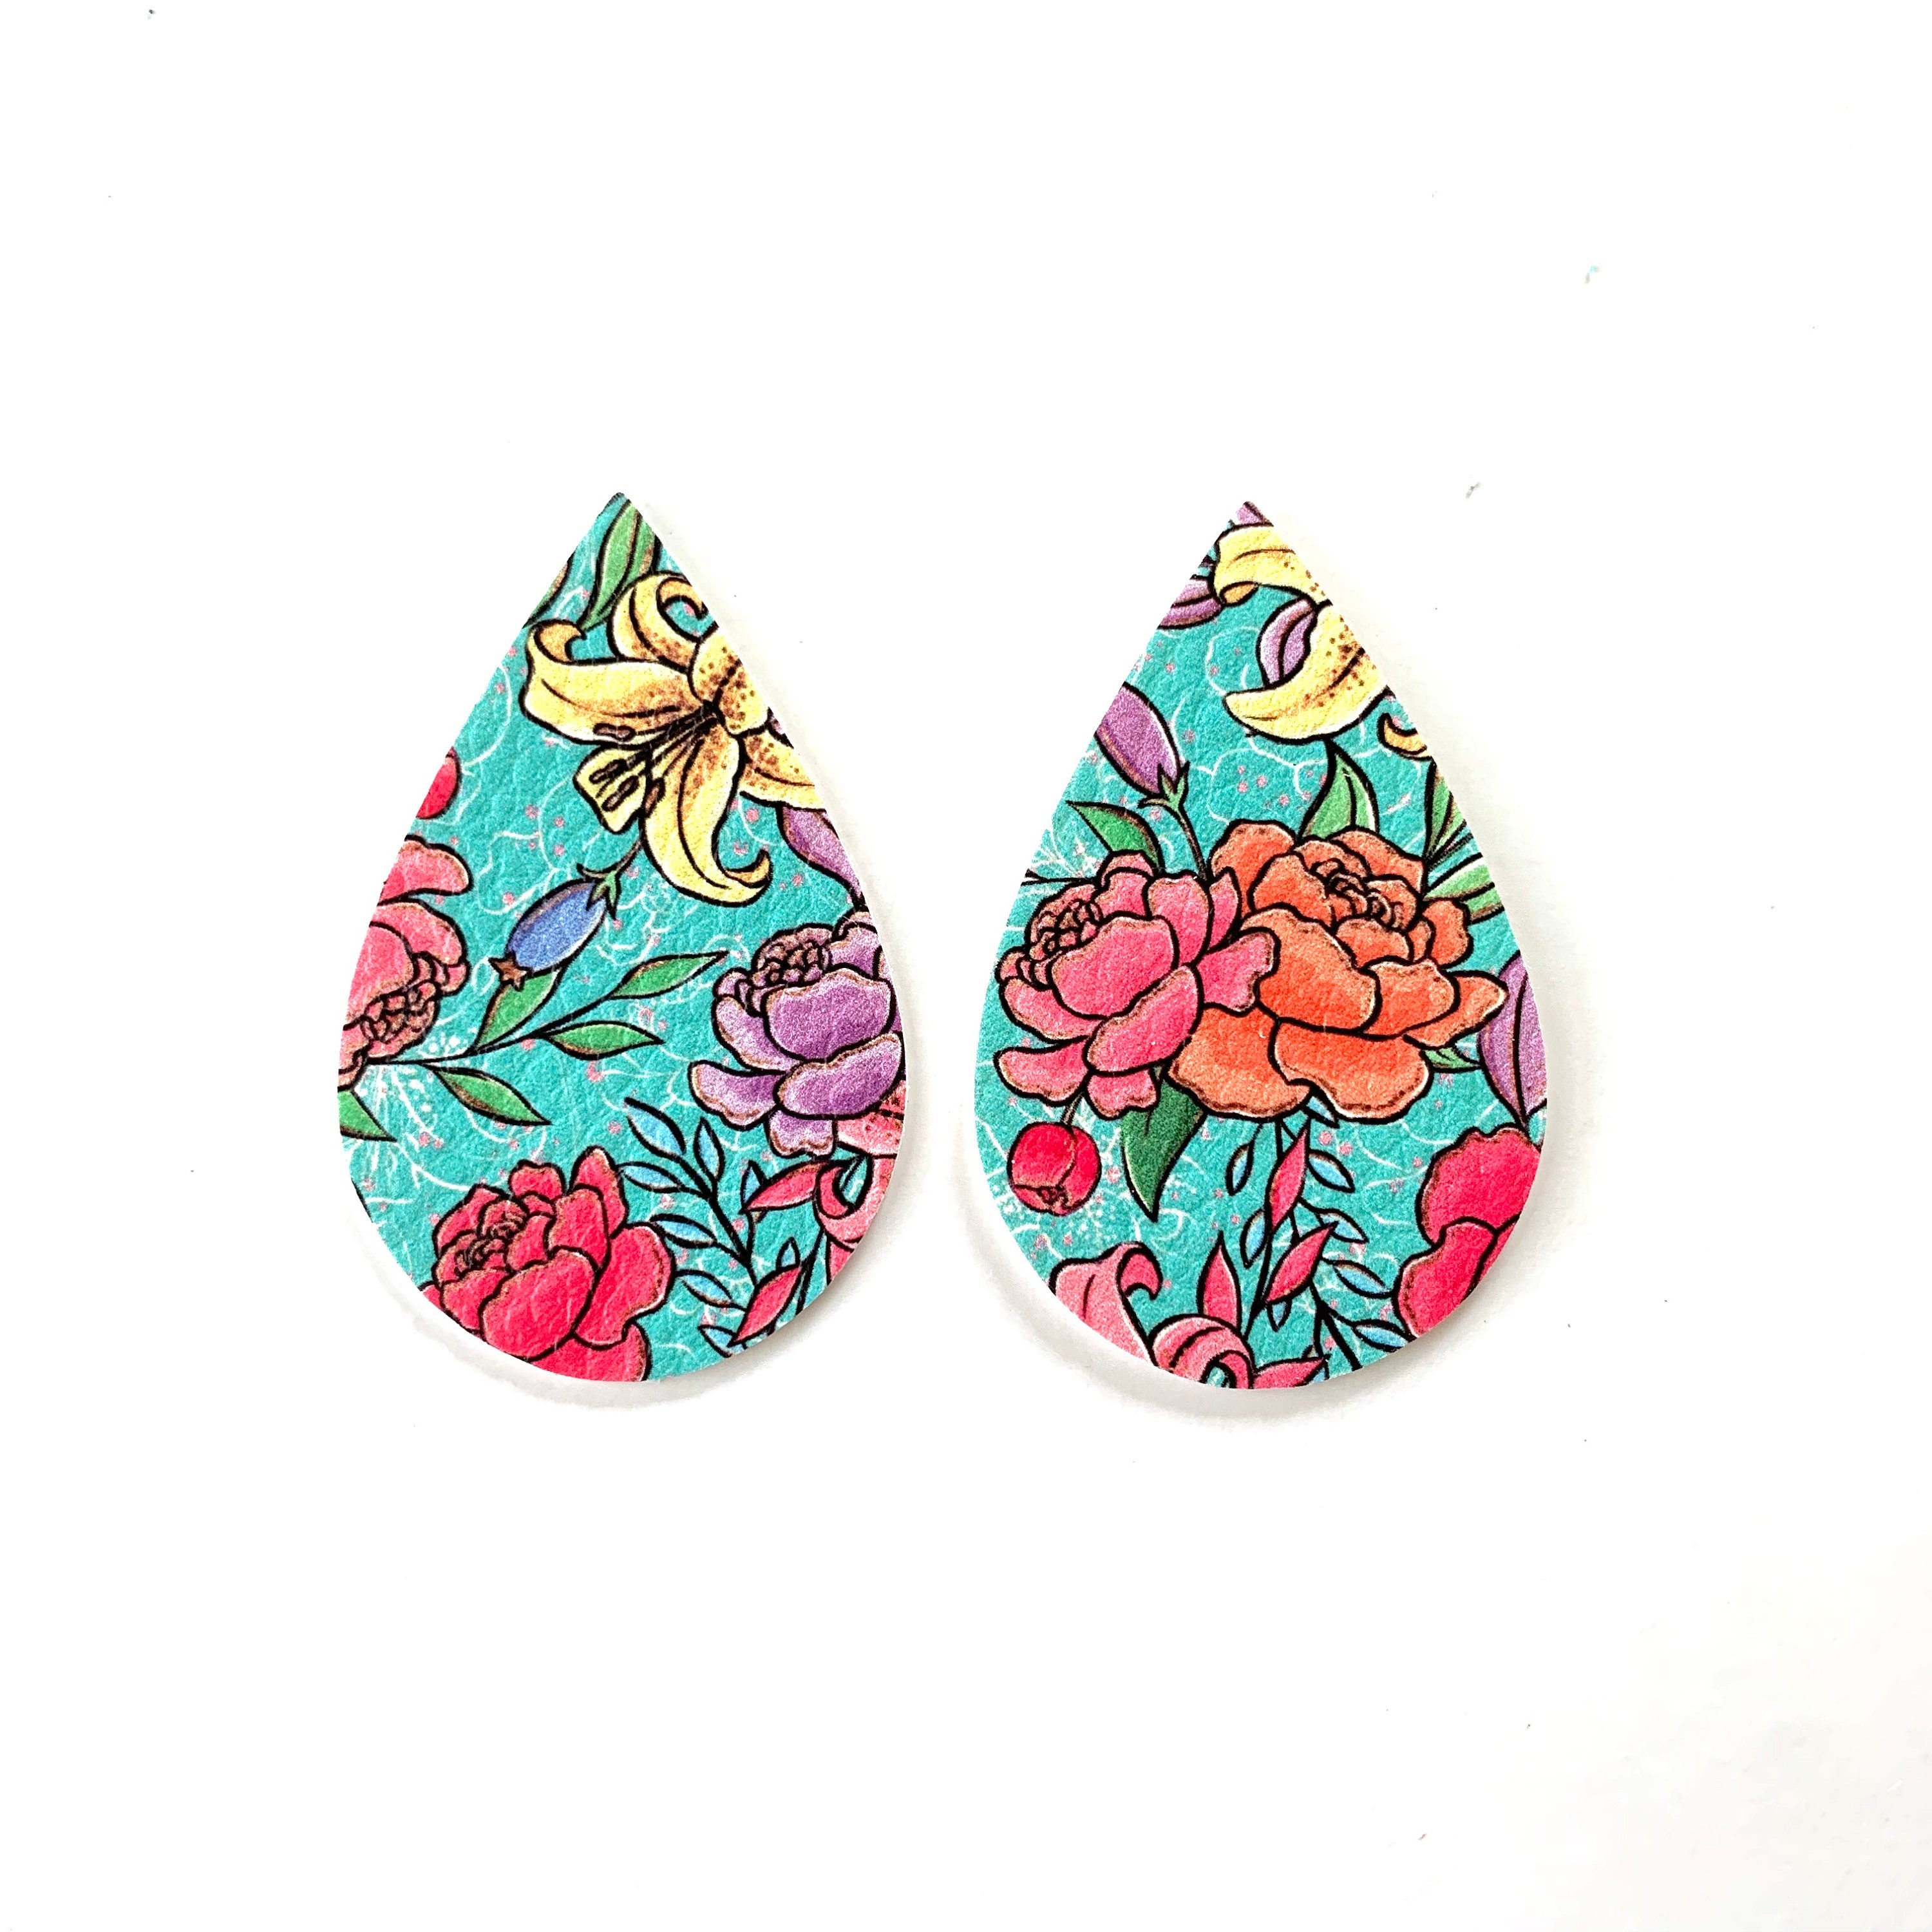 NEW FAUX Leather DIY Earrings Turquoise Hawaiian Floral Print Lilly Inspired Teardrop Earring Blanks Pre-cut Earring Pendant Shapes